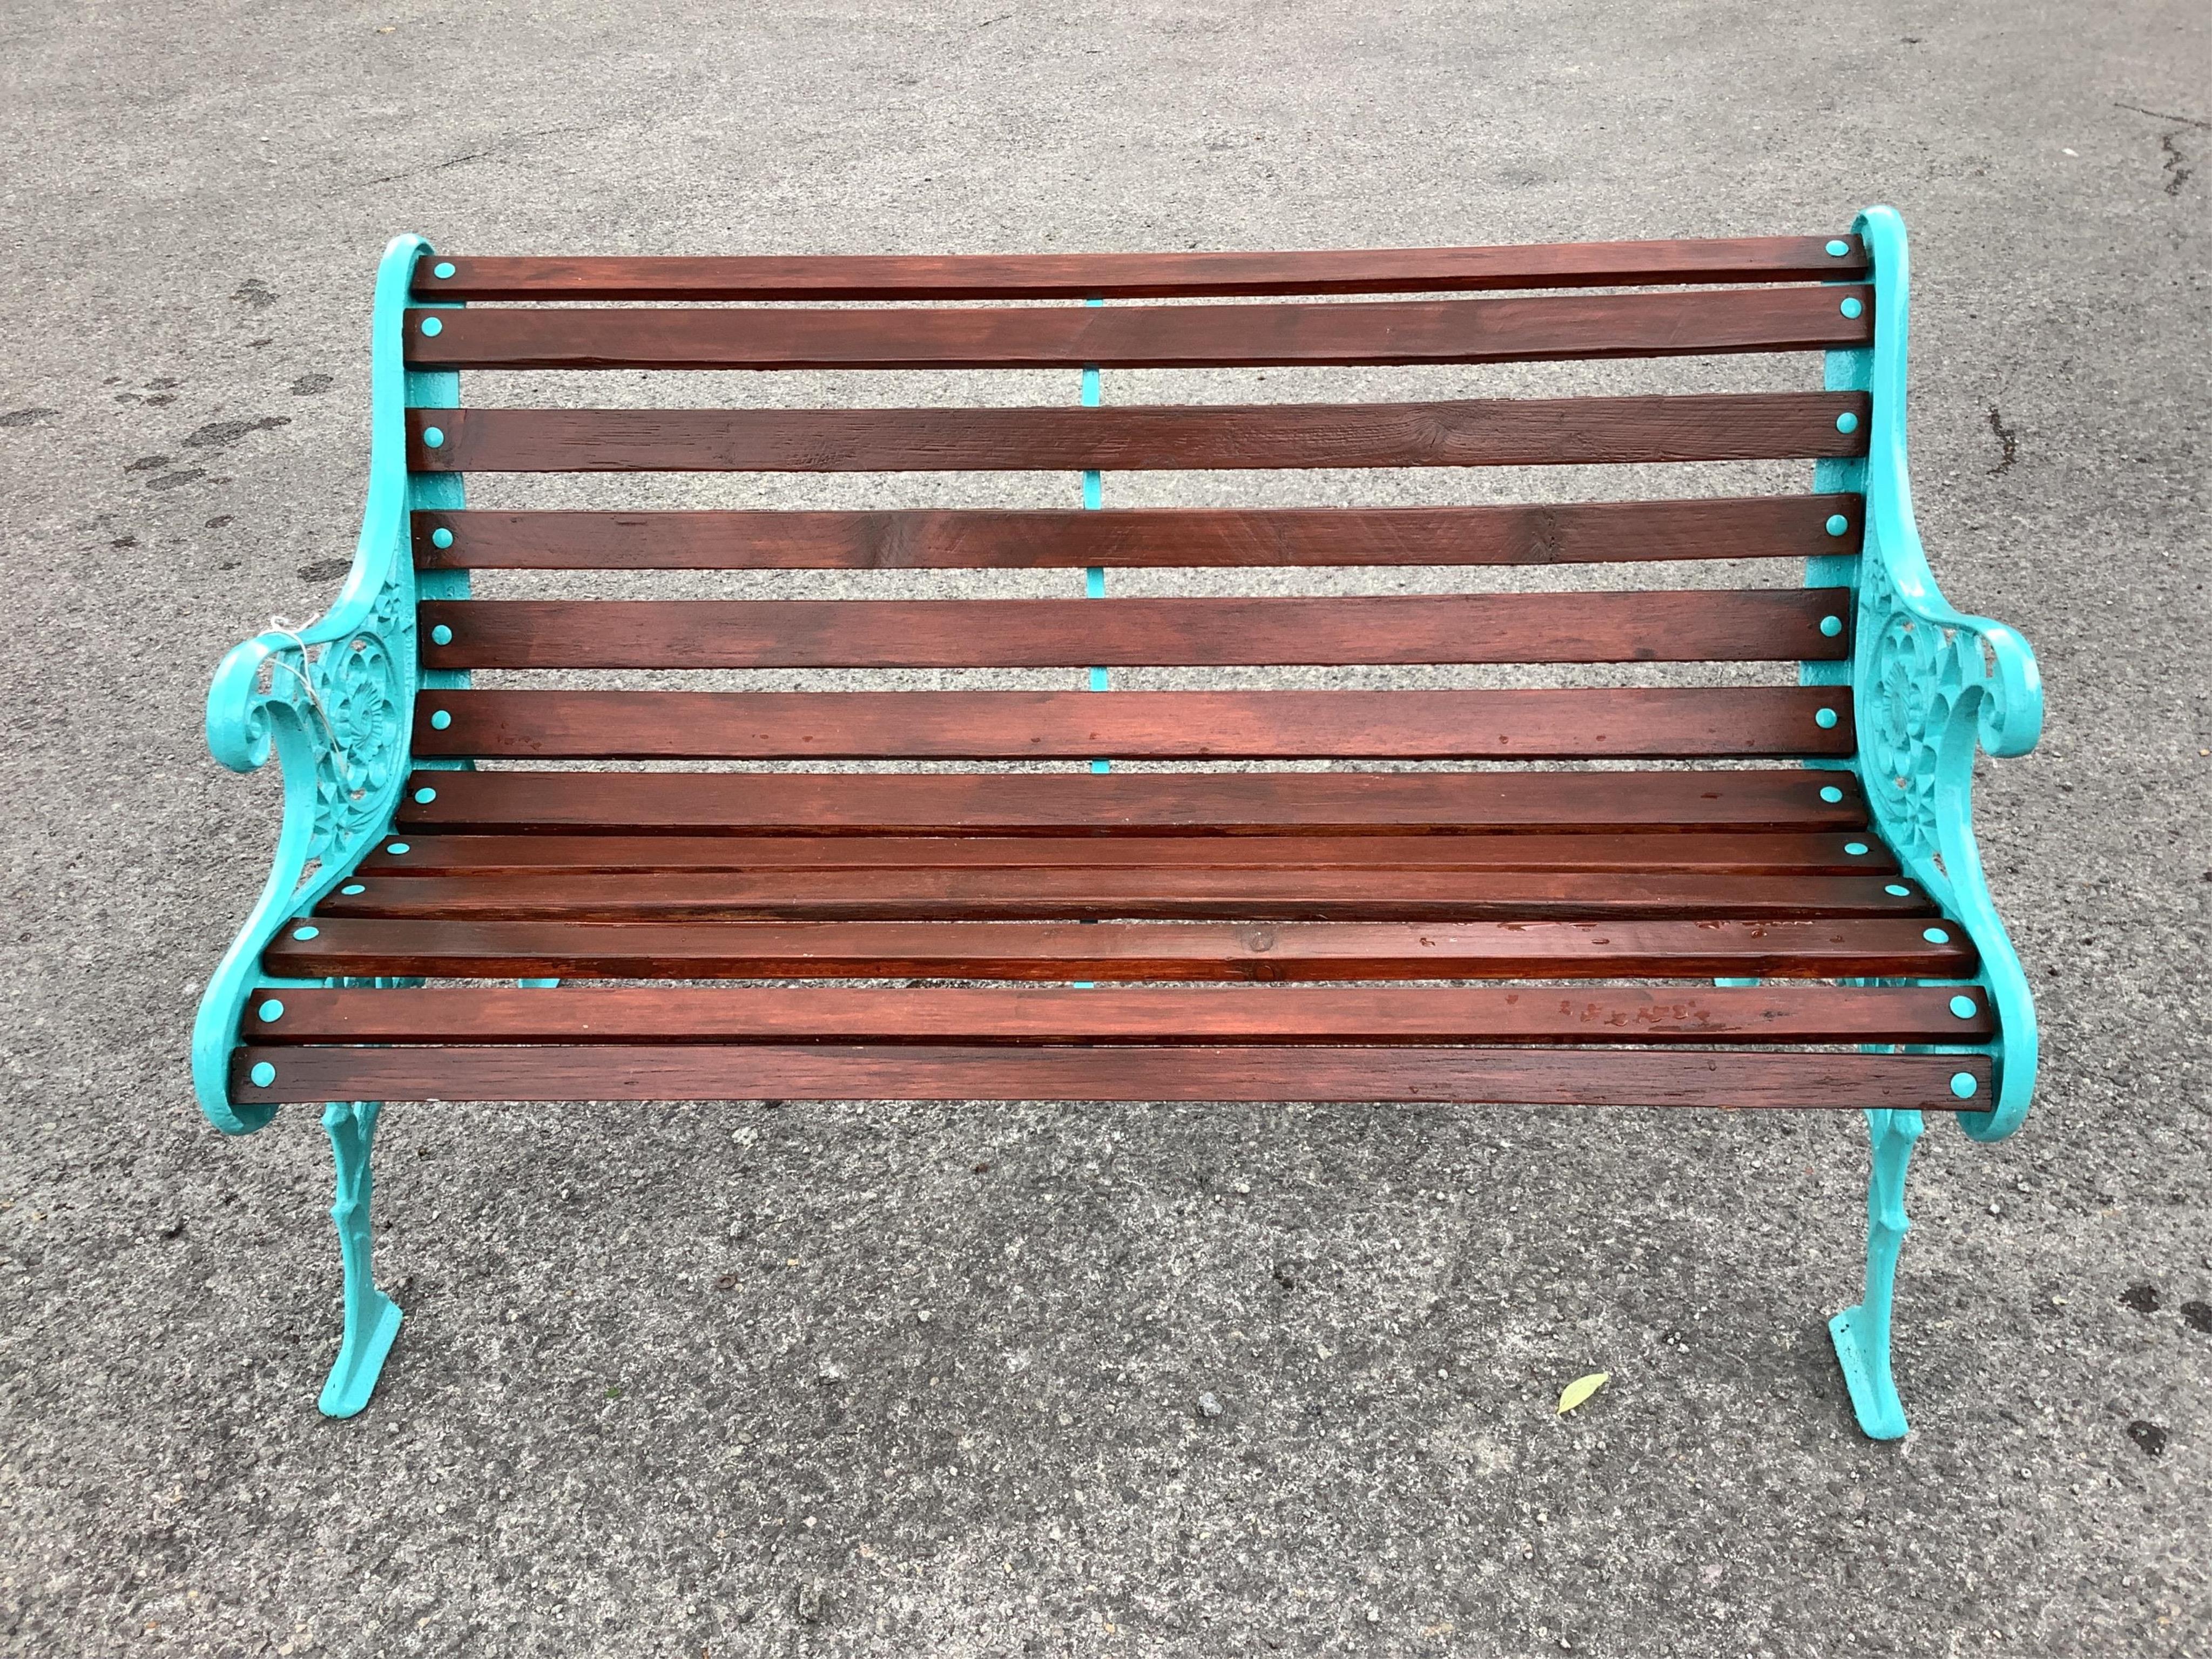 A Victorian style cast metal slatted wood garden bench, width 120cm, height 76cm